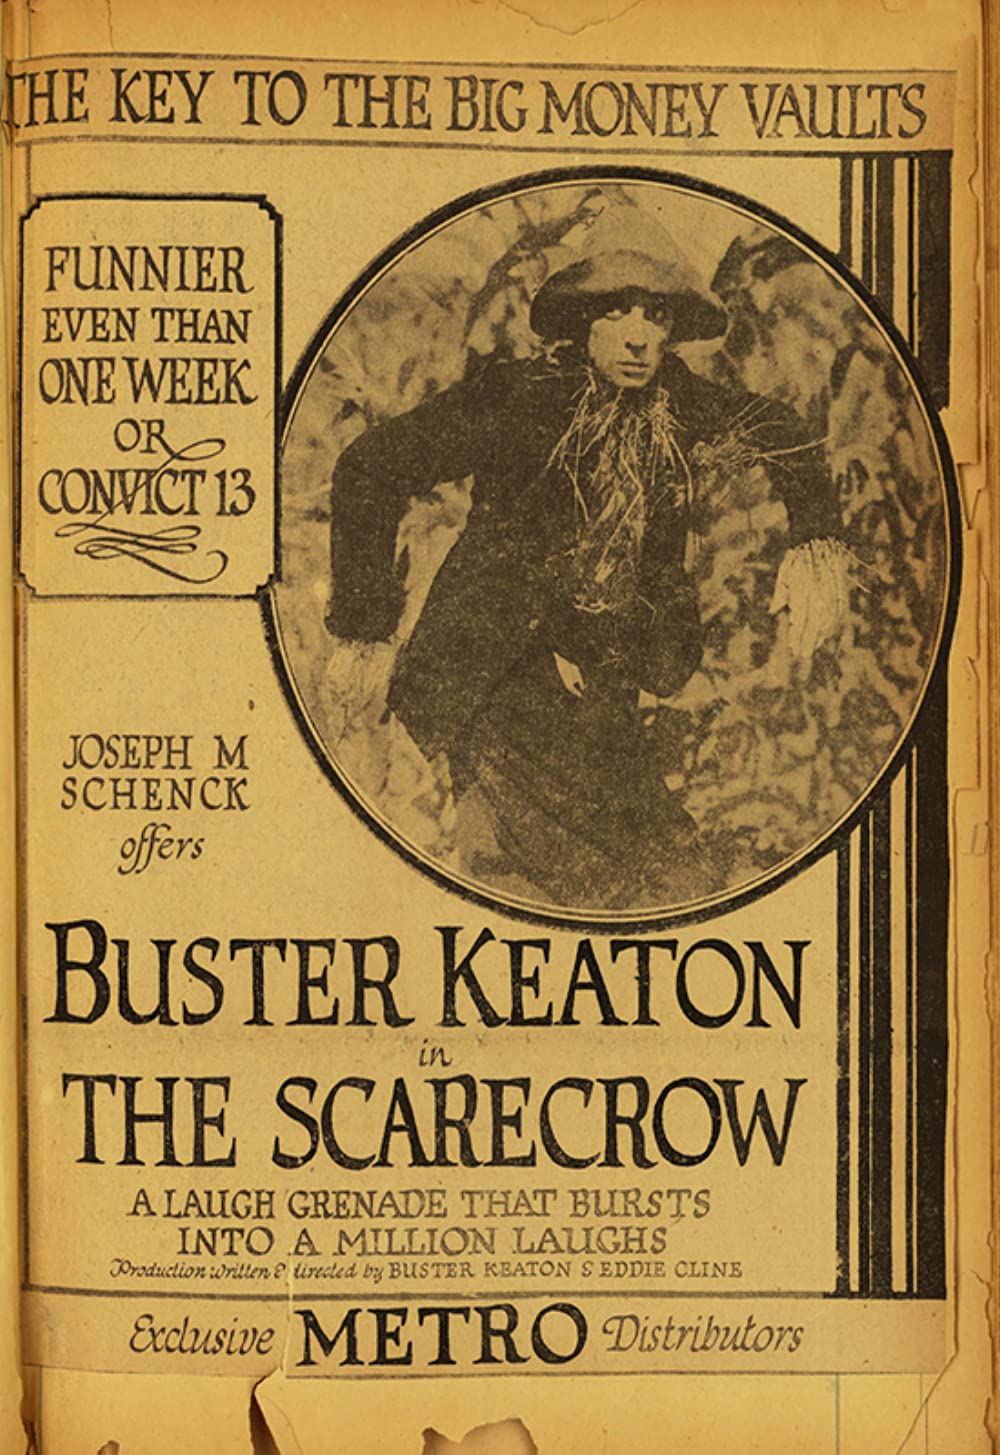 The Scarecrow (Short 1920)